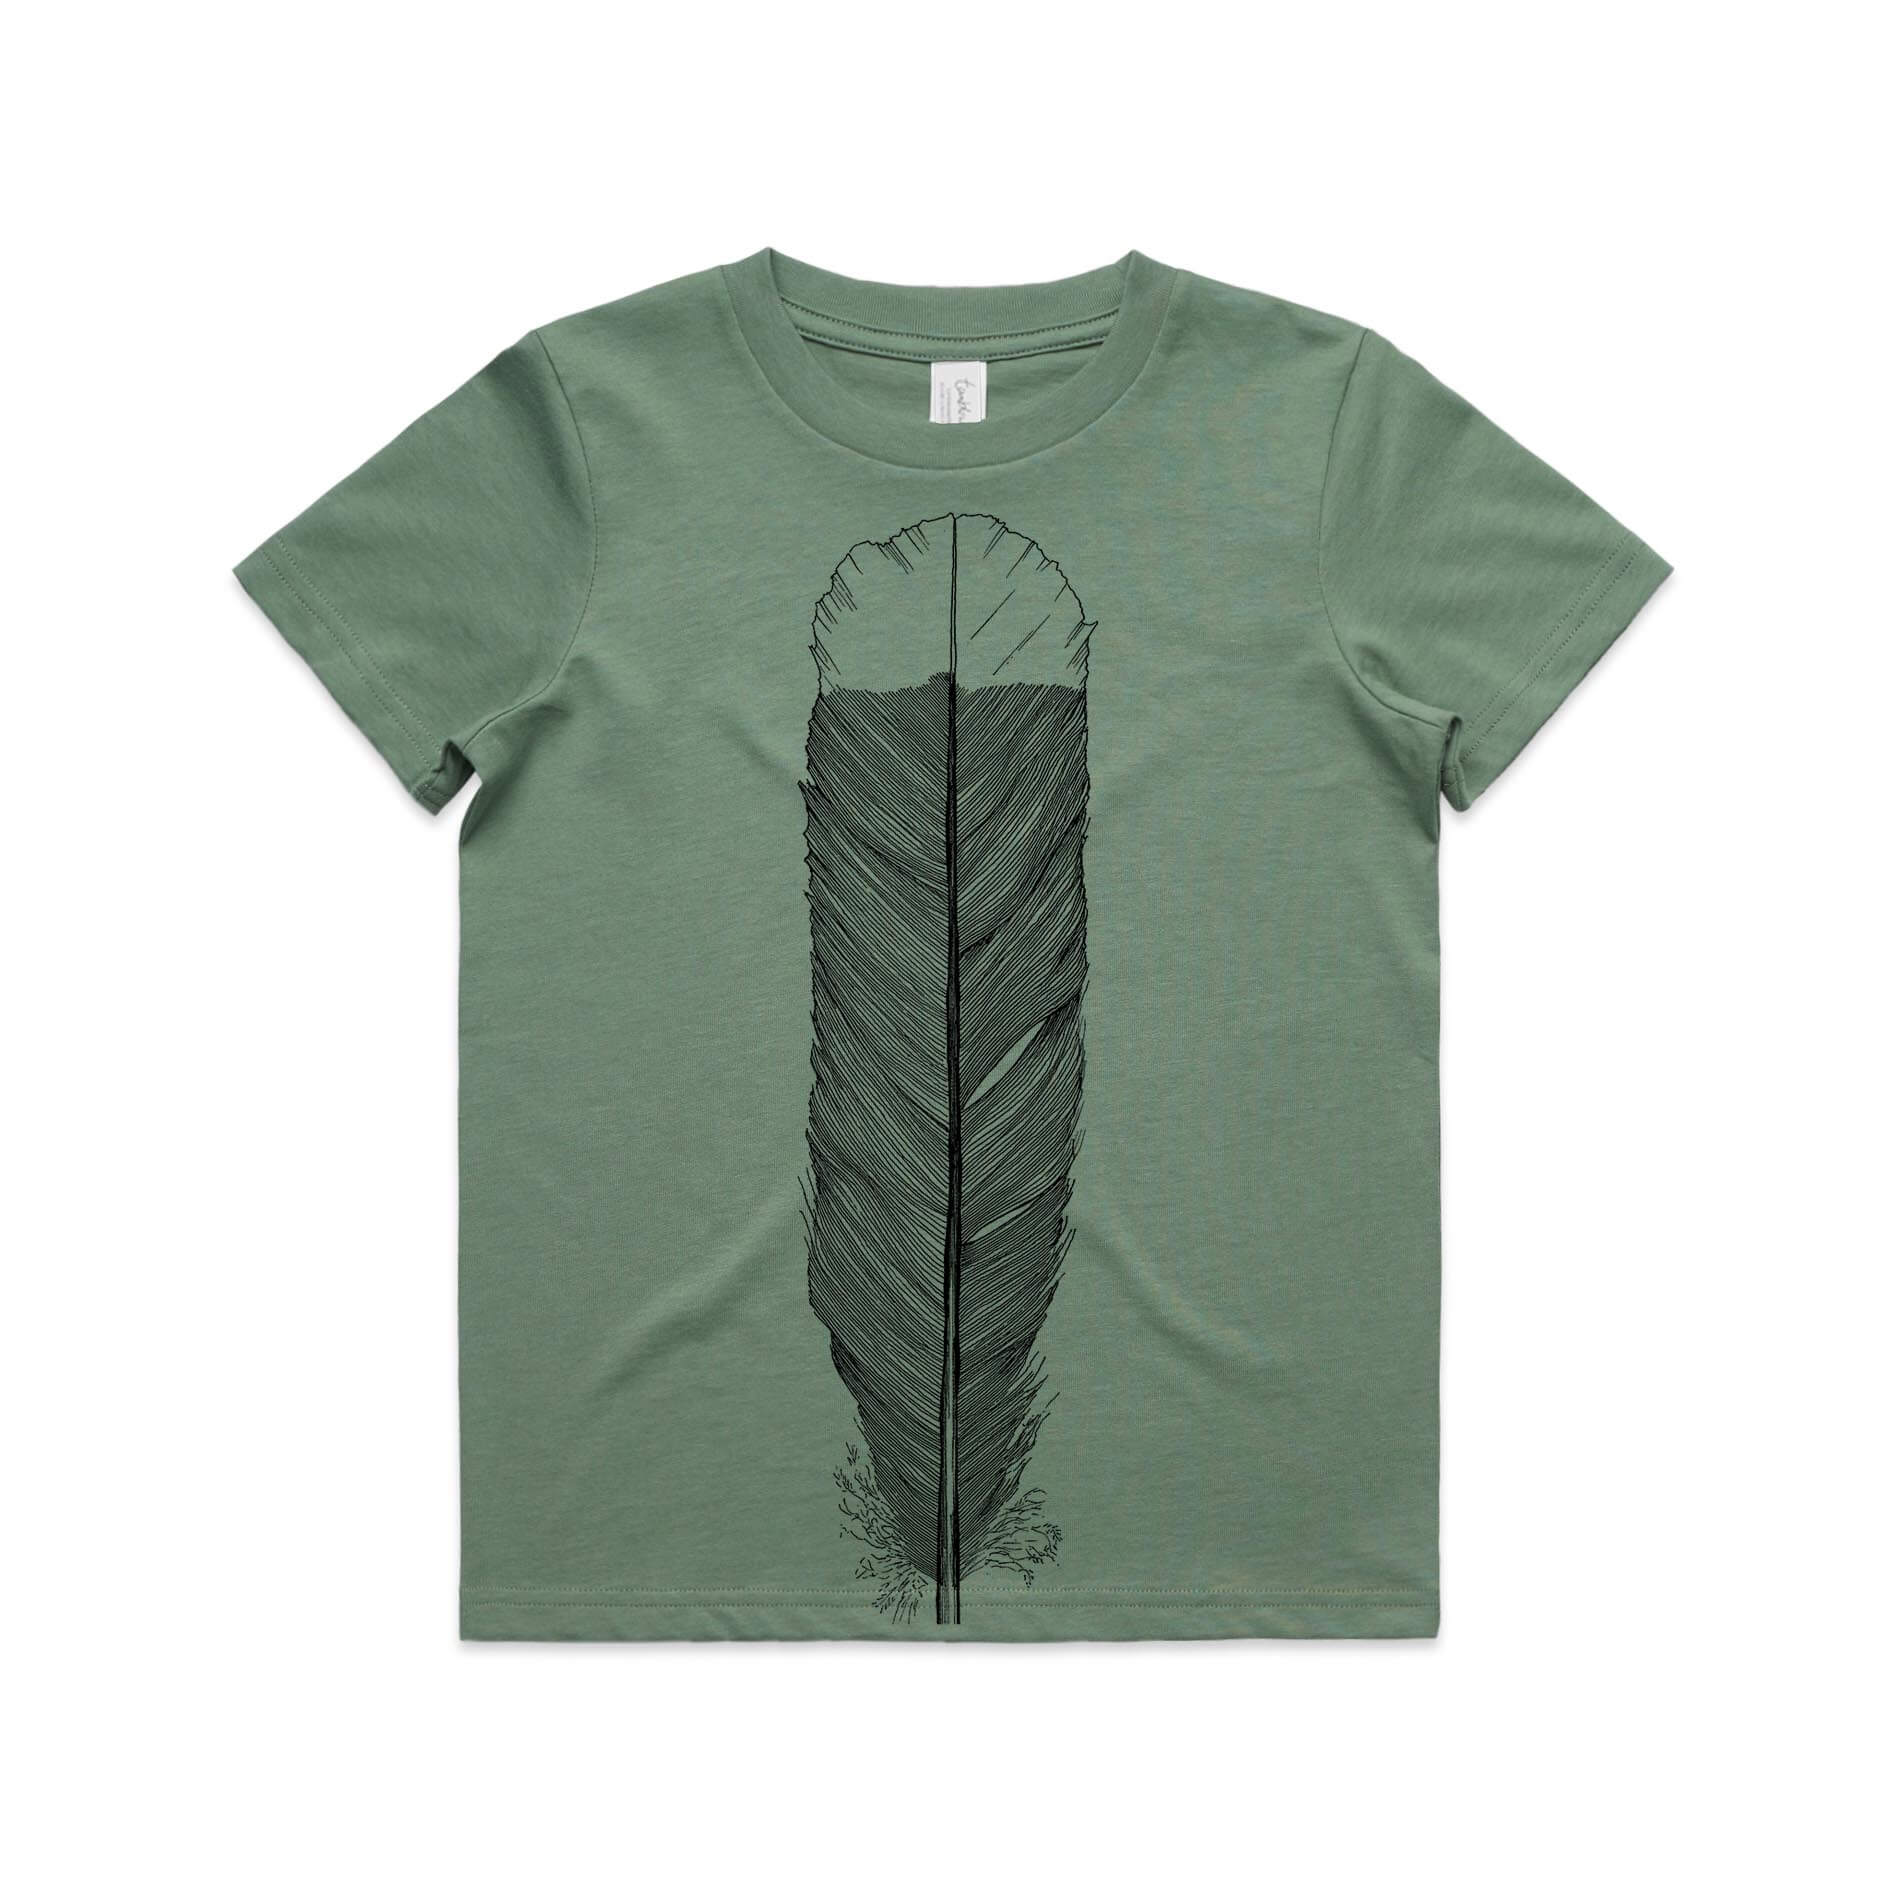 Sage, cotton kids' t-shirt with screen printed Kids hihi/stitchbird design.